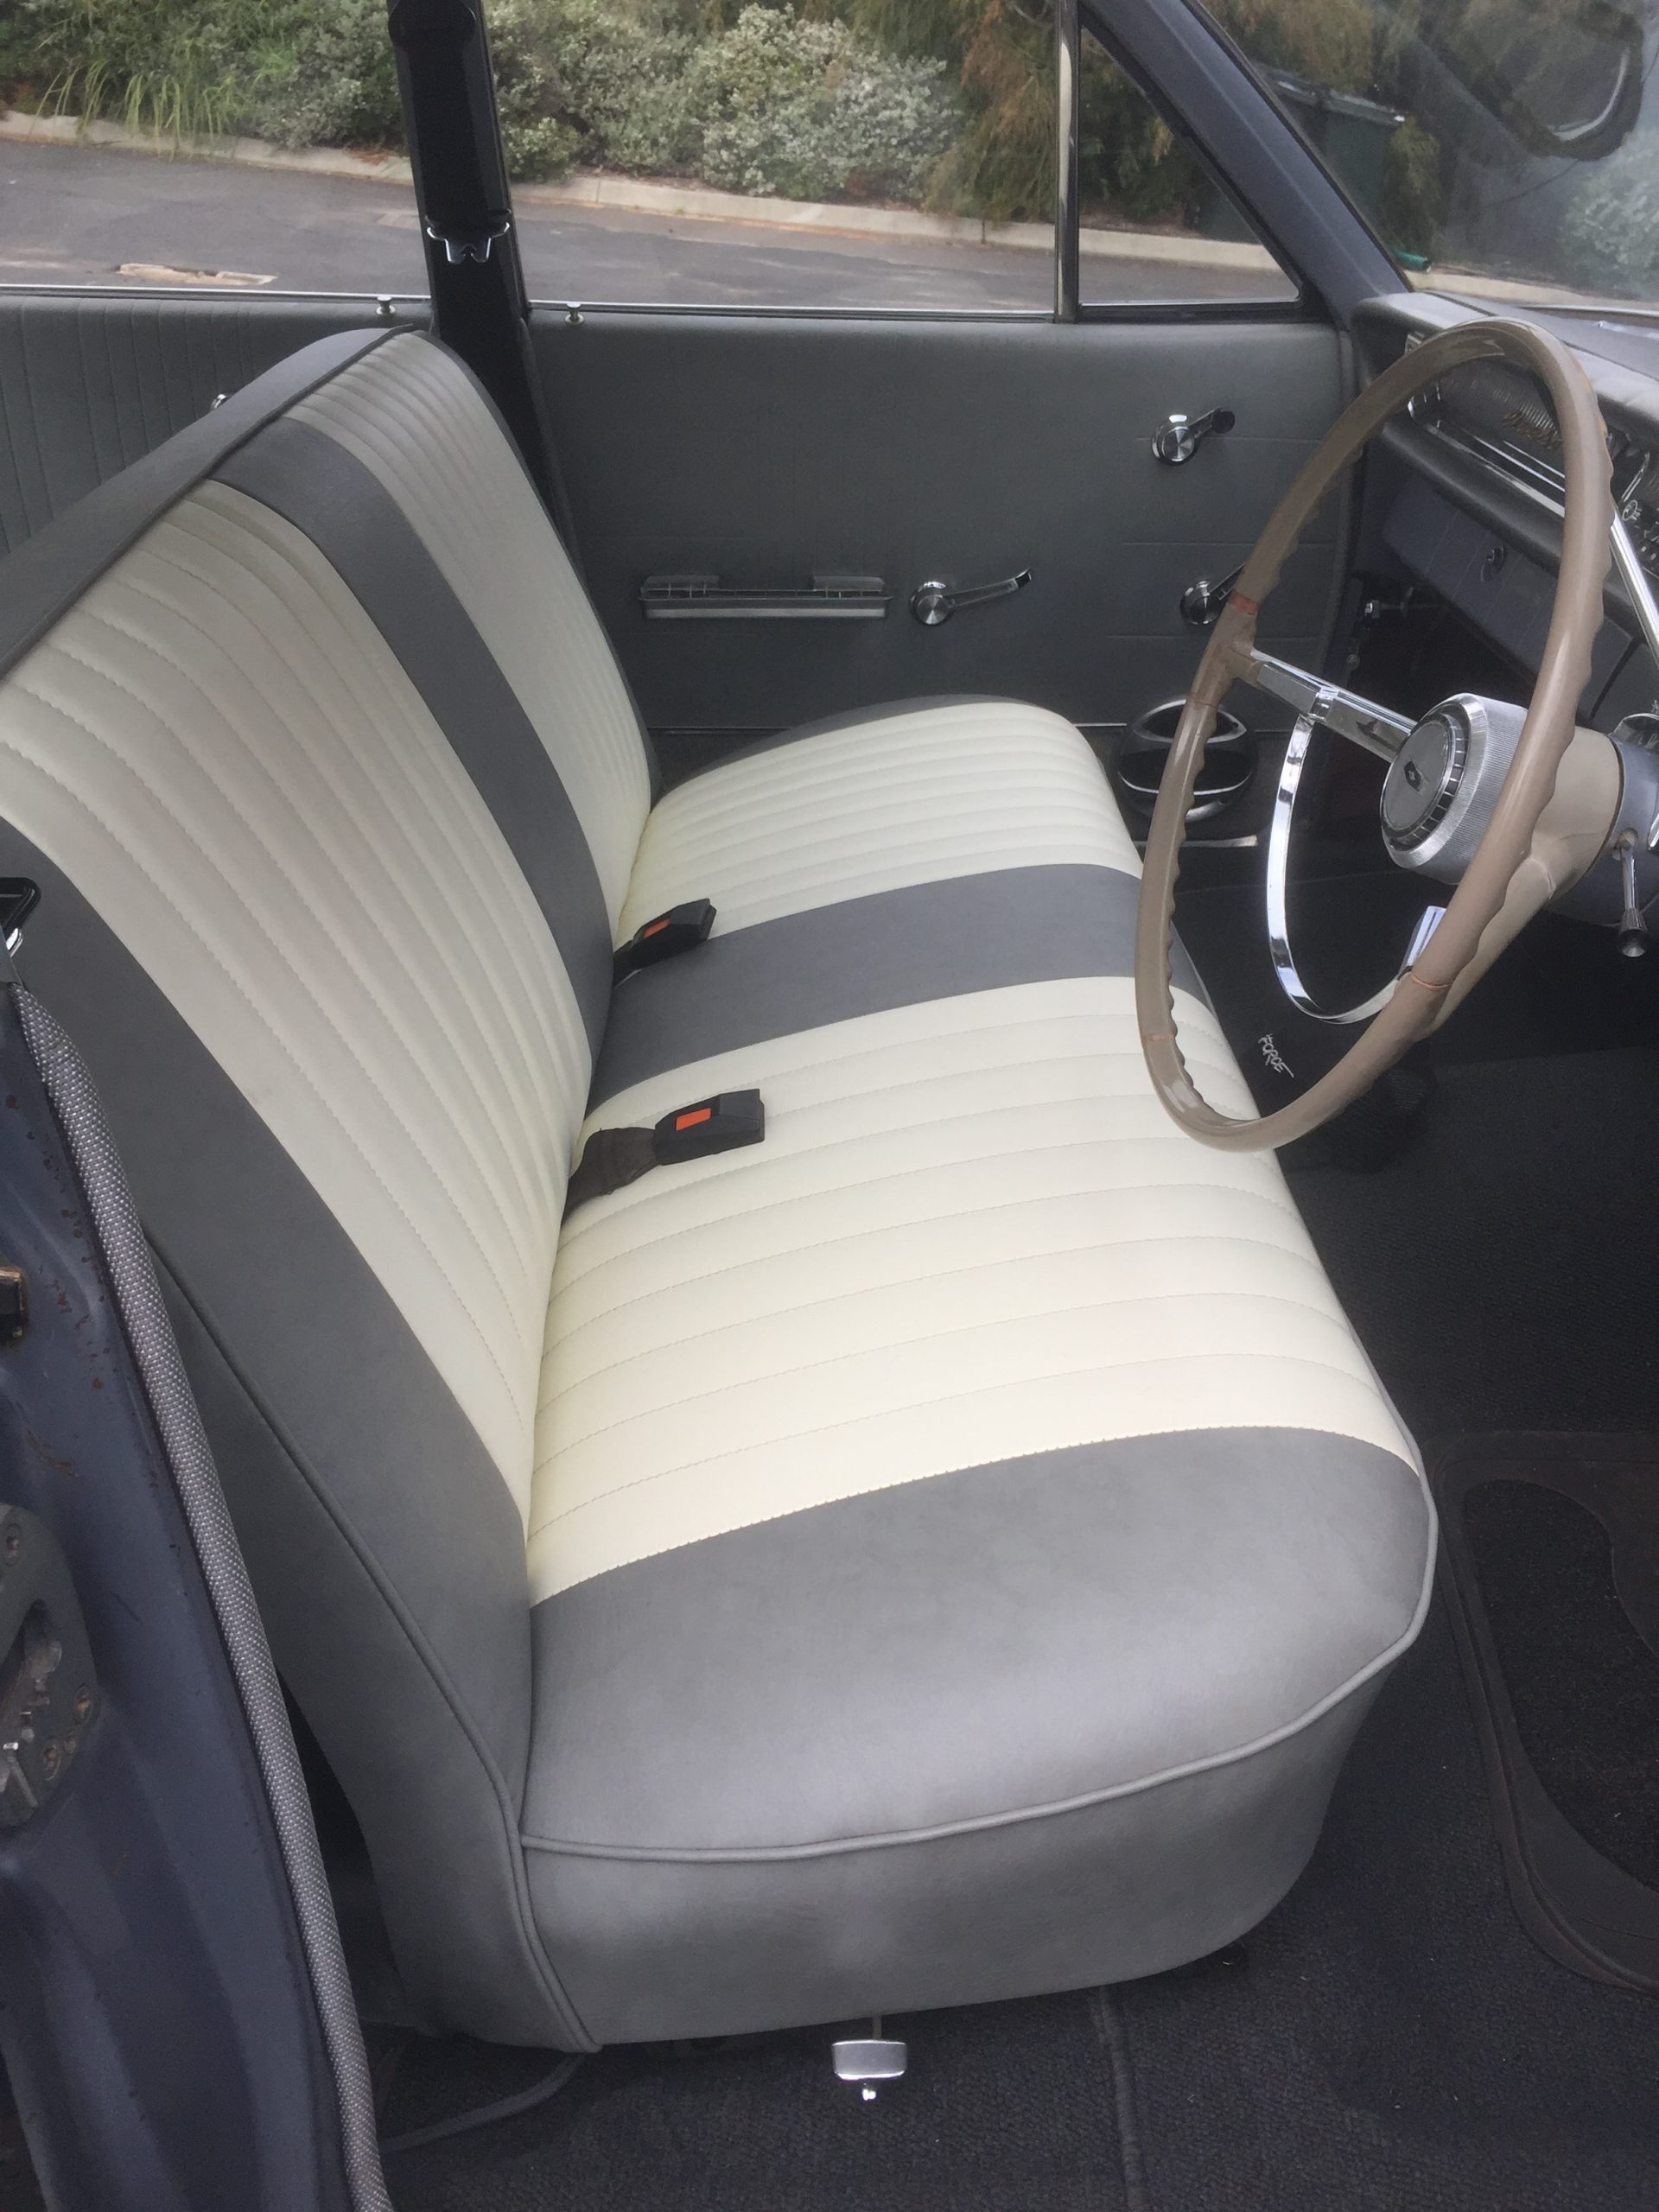 Car Seats Reupholstered